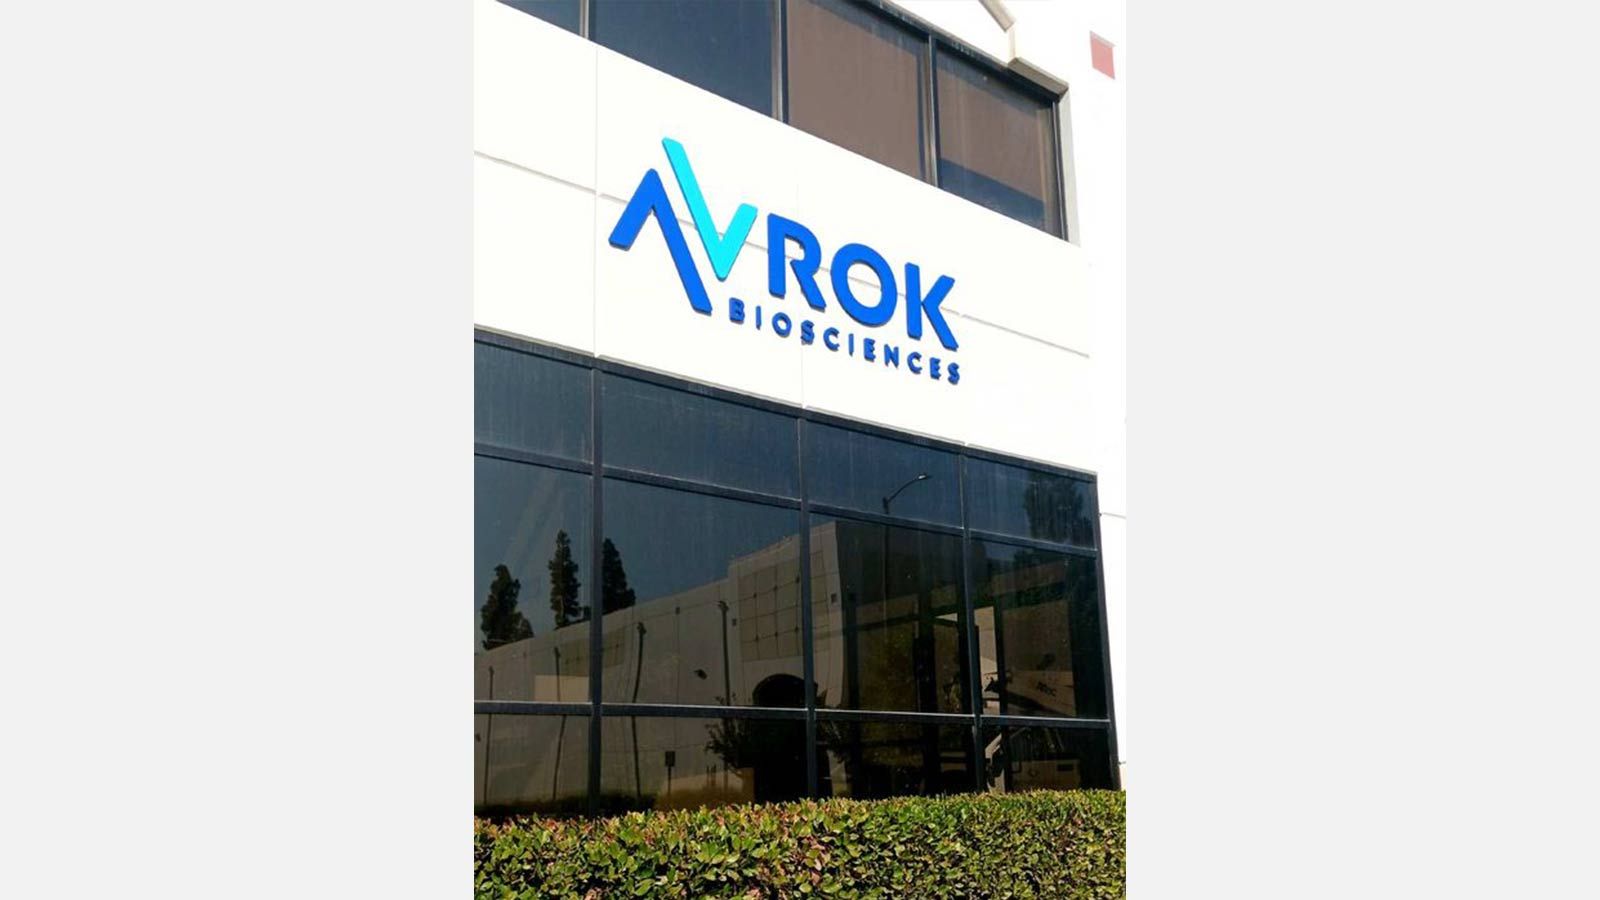 Avrok Biosciences building sign displayed on the facade